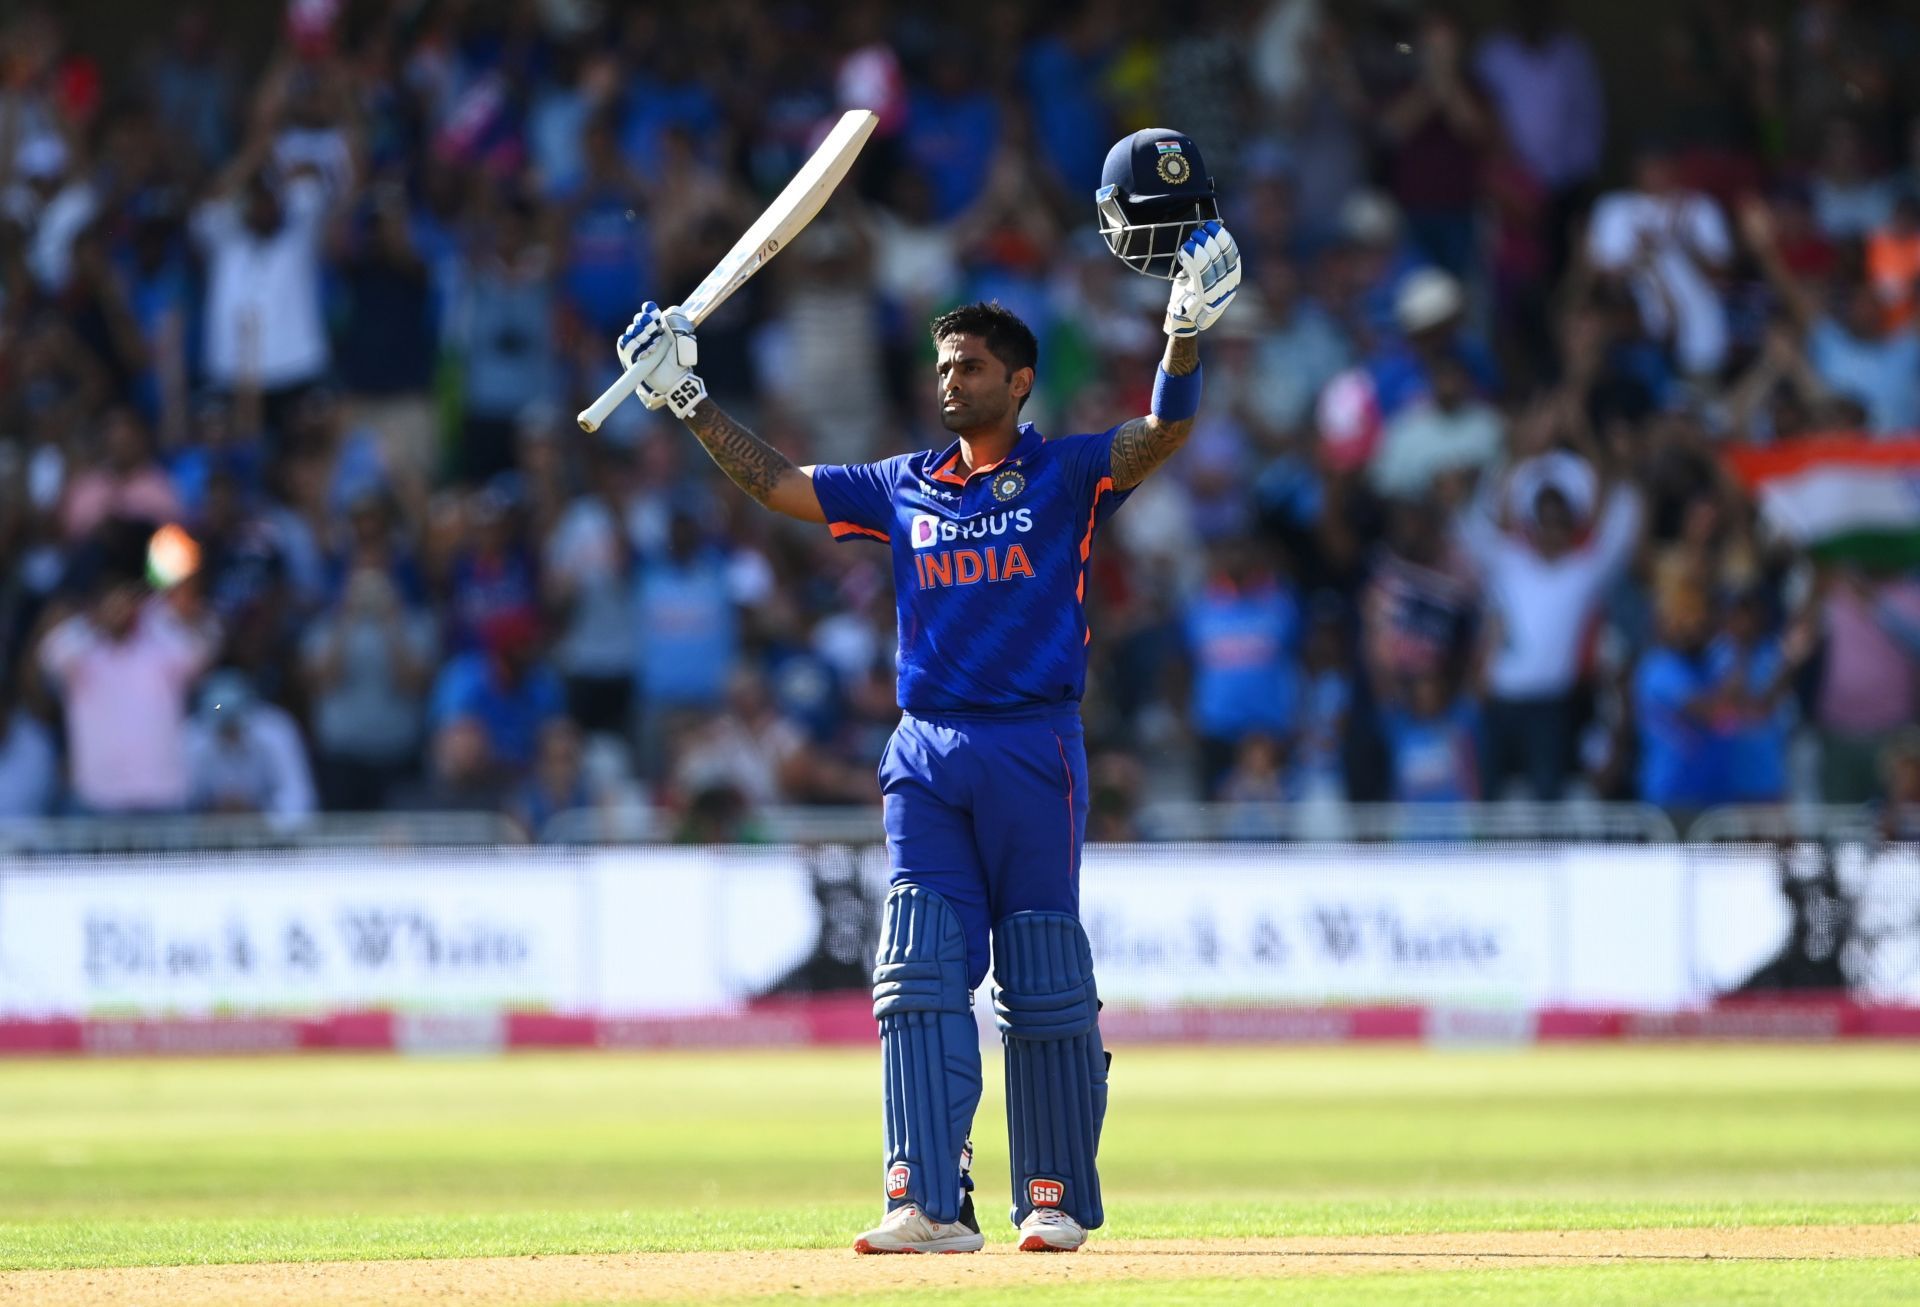 Suryakumar Yadav smoked a blazing century in the final T20I against England